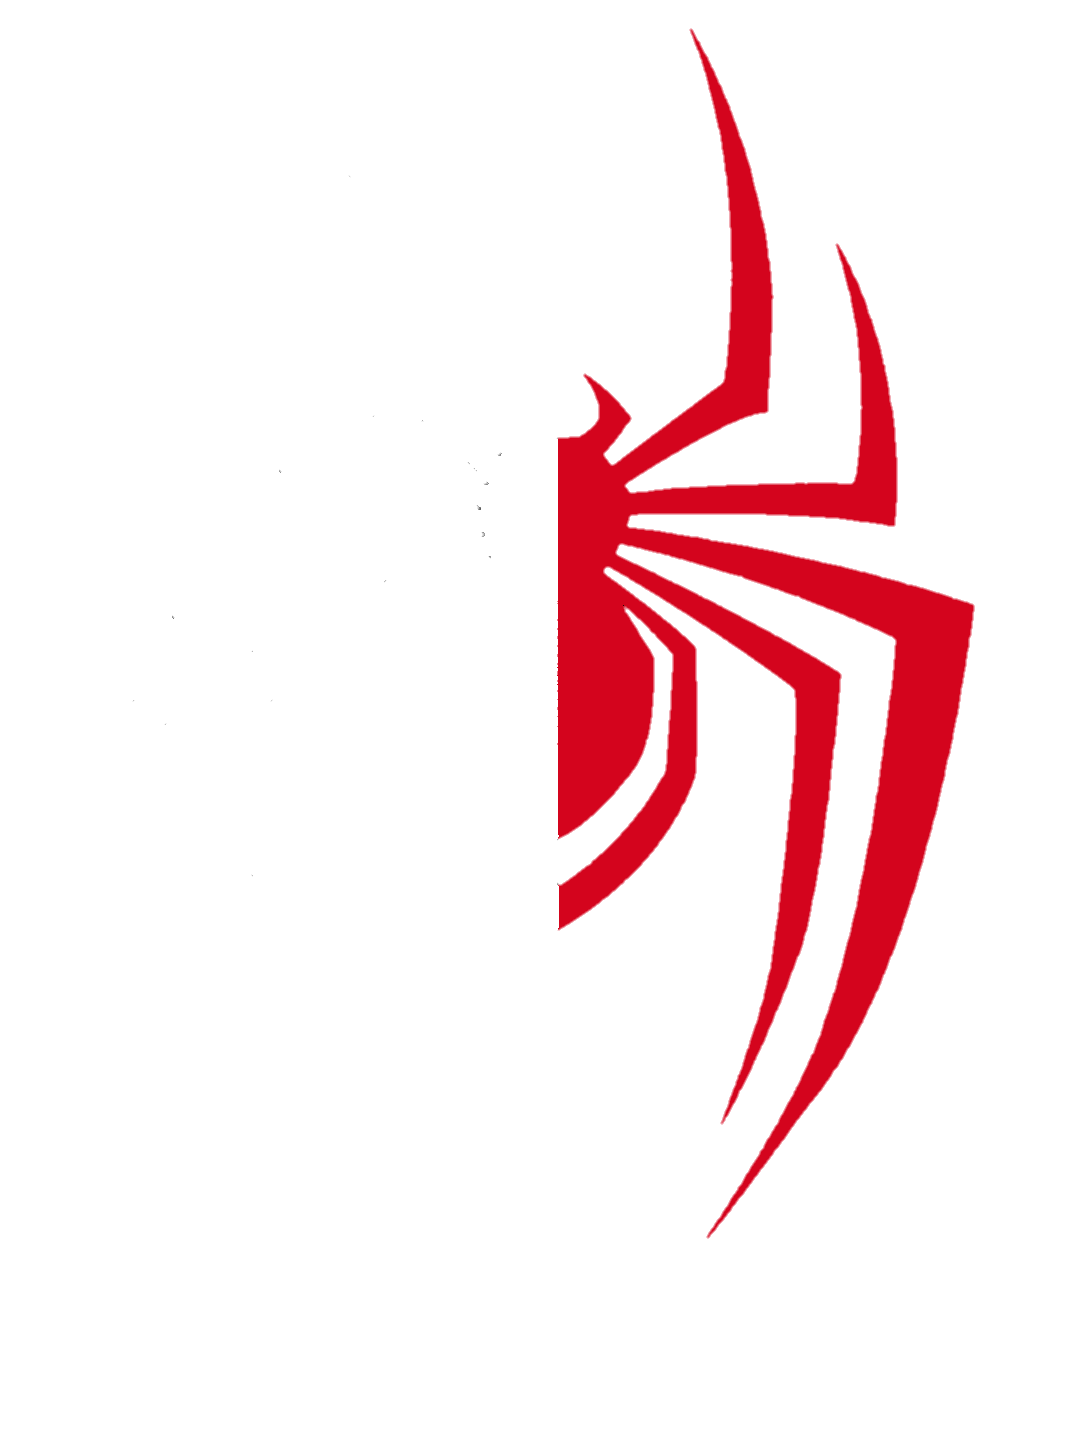 Marvel's Spider-Man 2 Desktop Wallpaper by crillyboy25 on DeviantArt